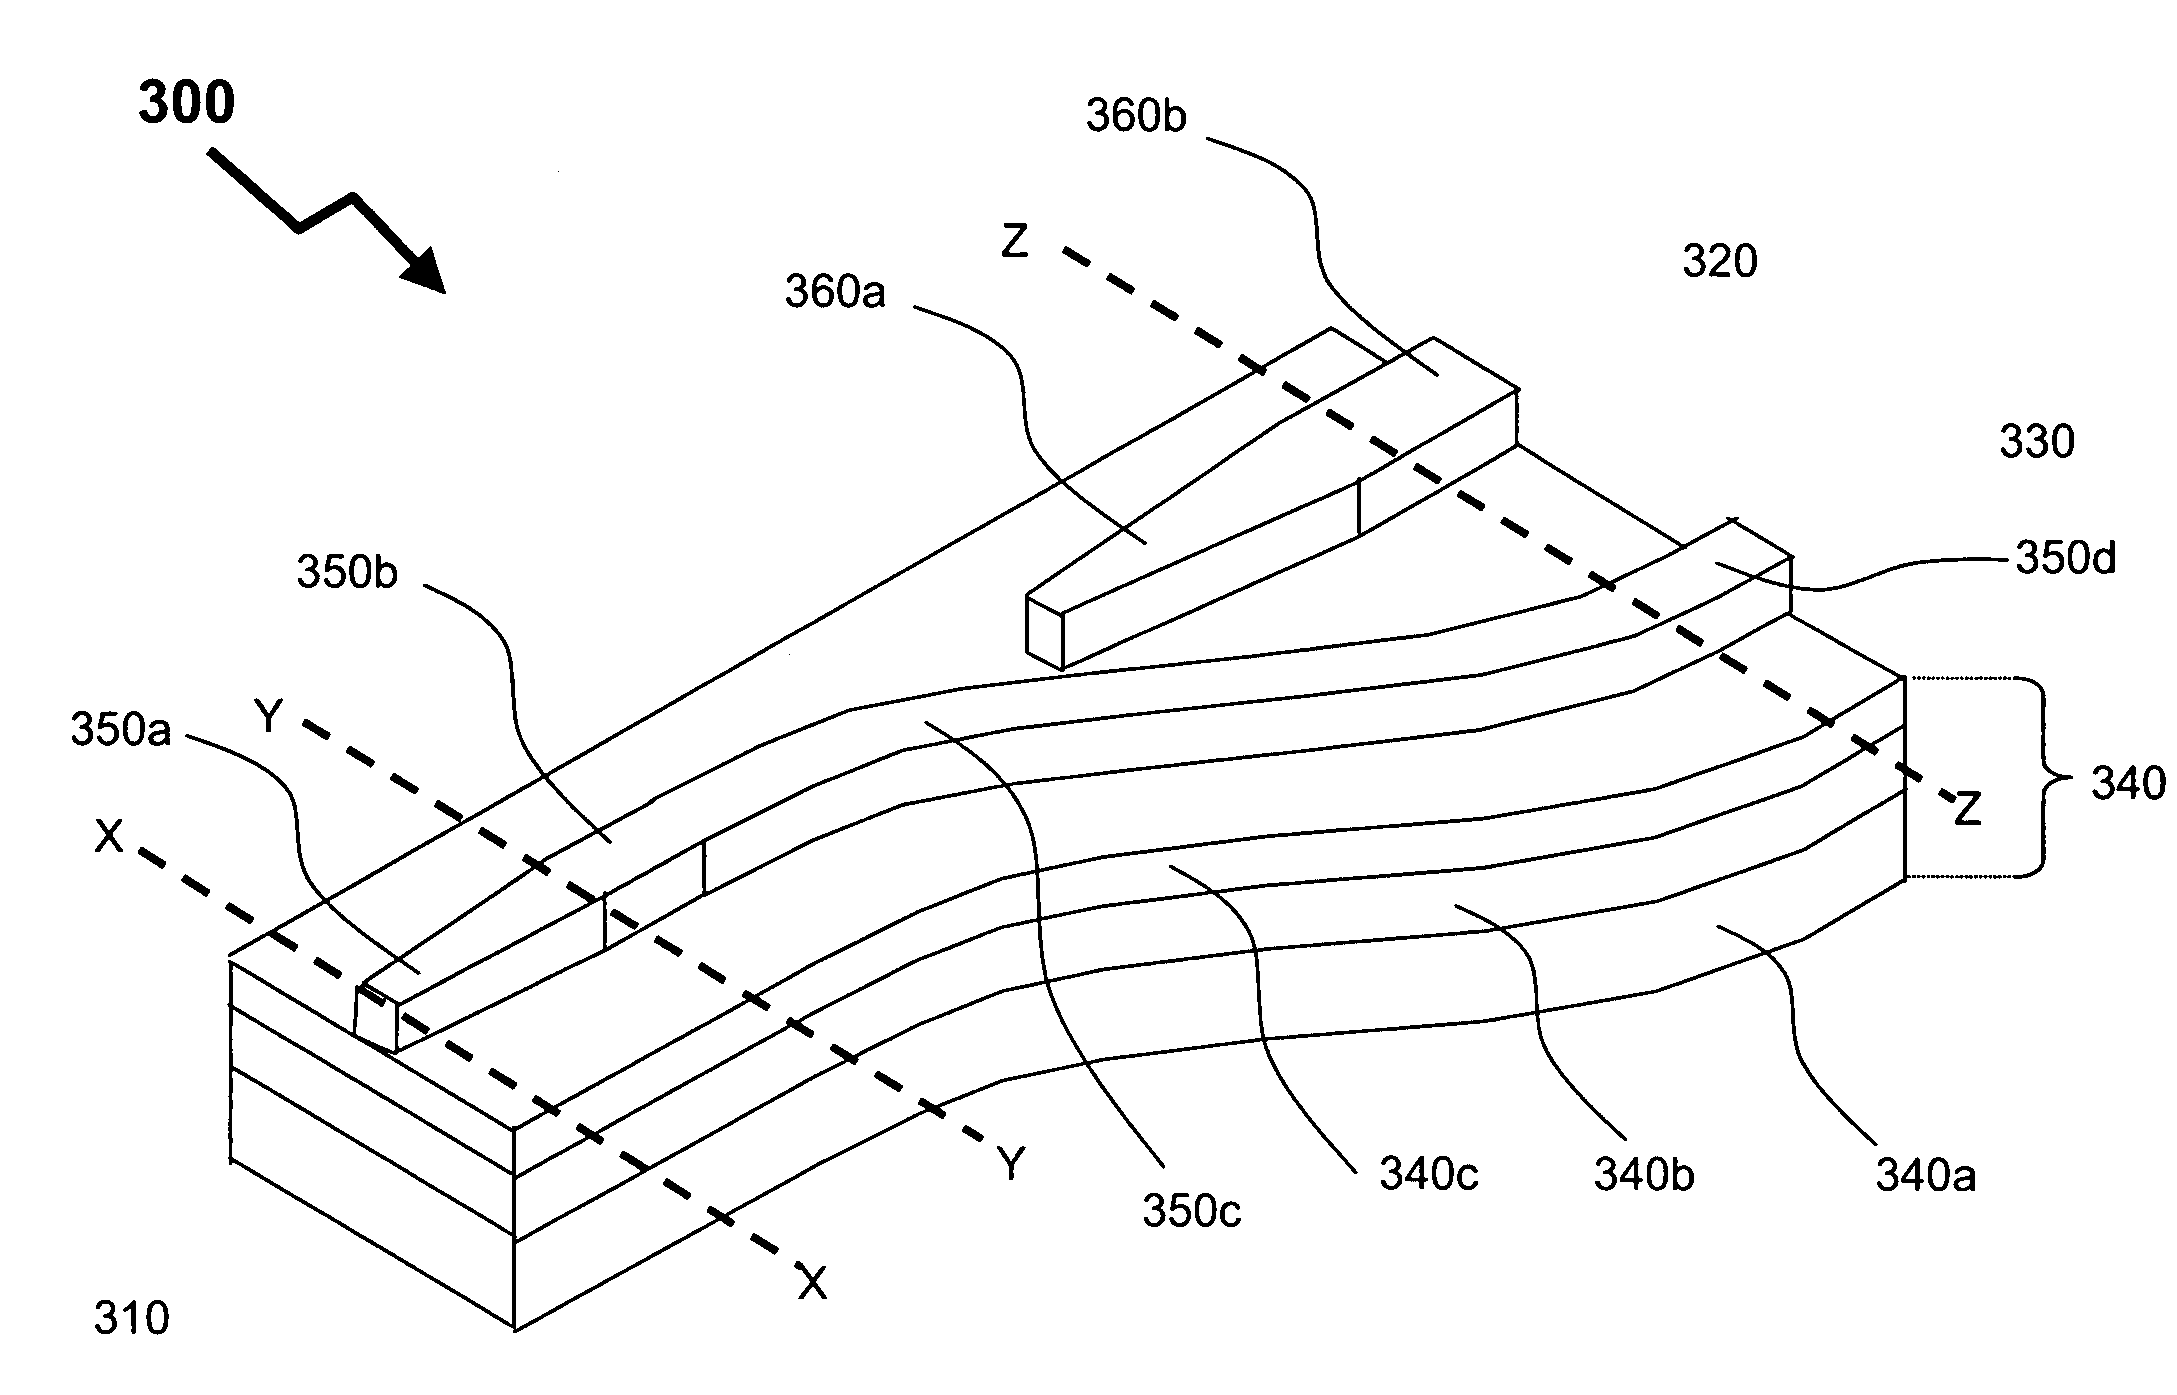 Integrated optics arrangement for wavelength (De)multiplexing in a multi-grade vertical stack